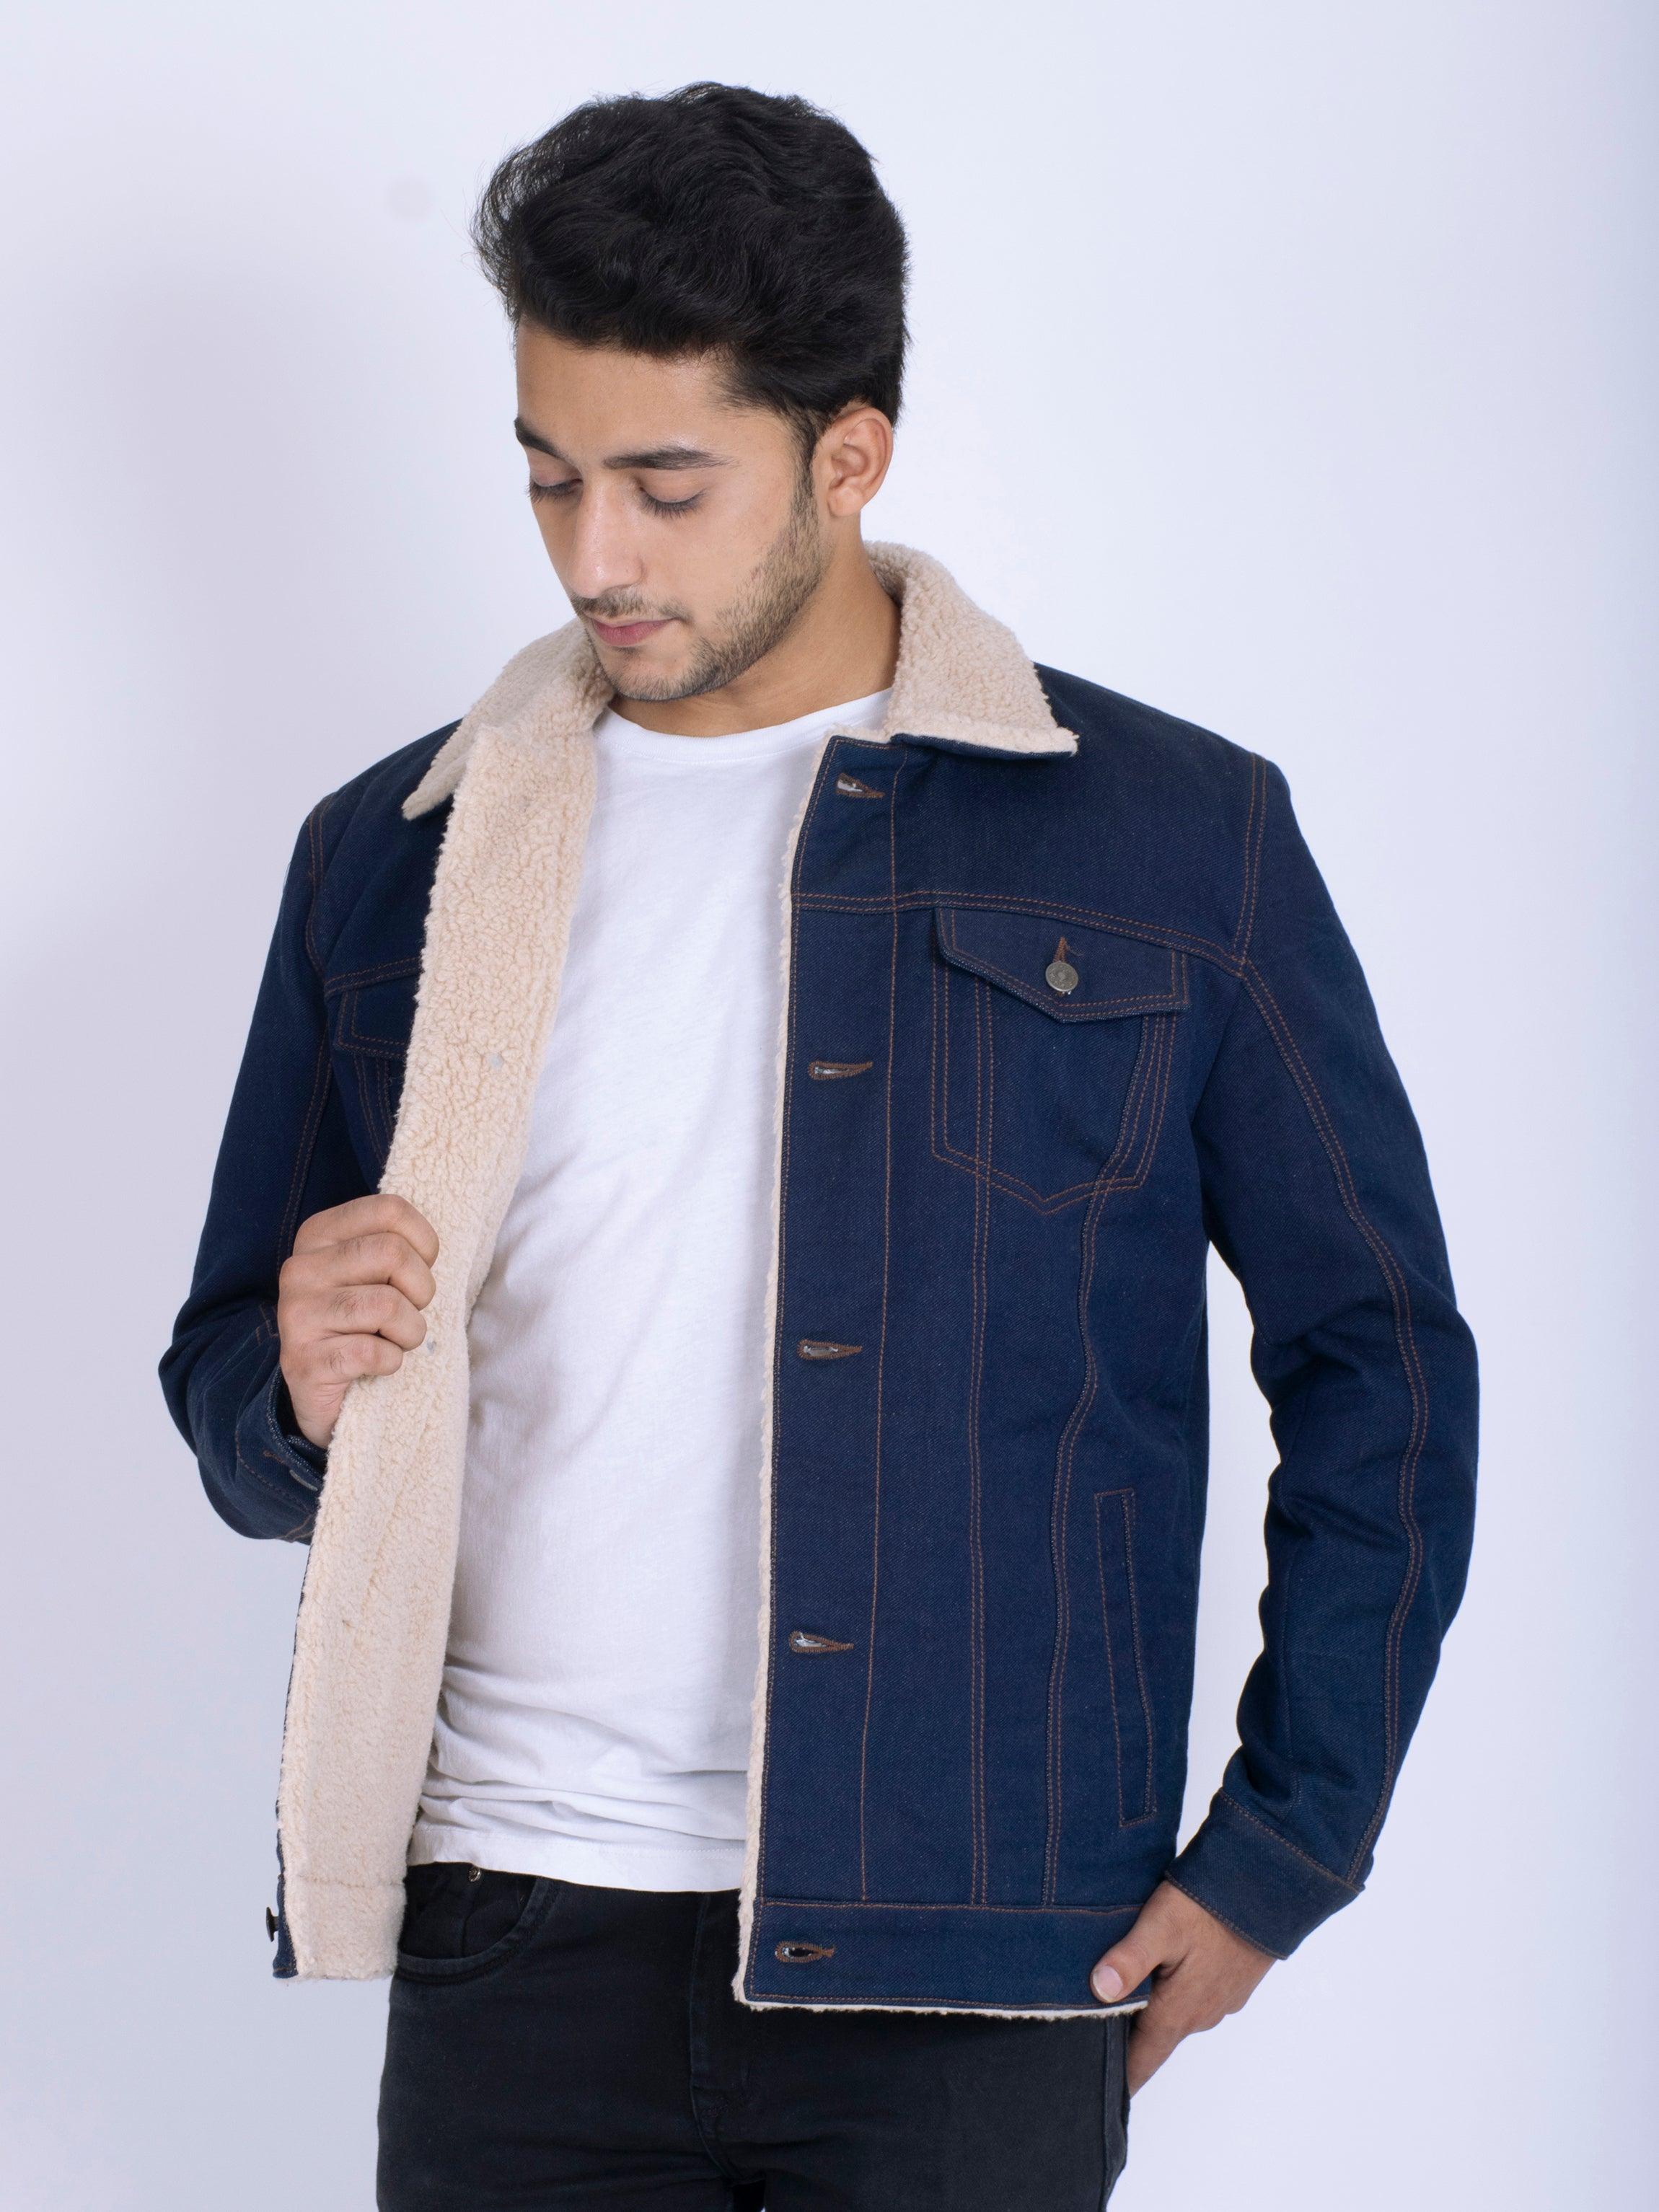 Men's Winter Fleece Lined Denim Jacket Fur Collar Quilted Jean Coat Light  Blue L : Amazon.in: Clothing & Accessories